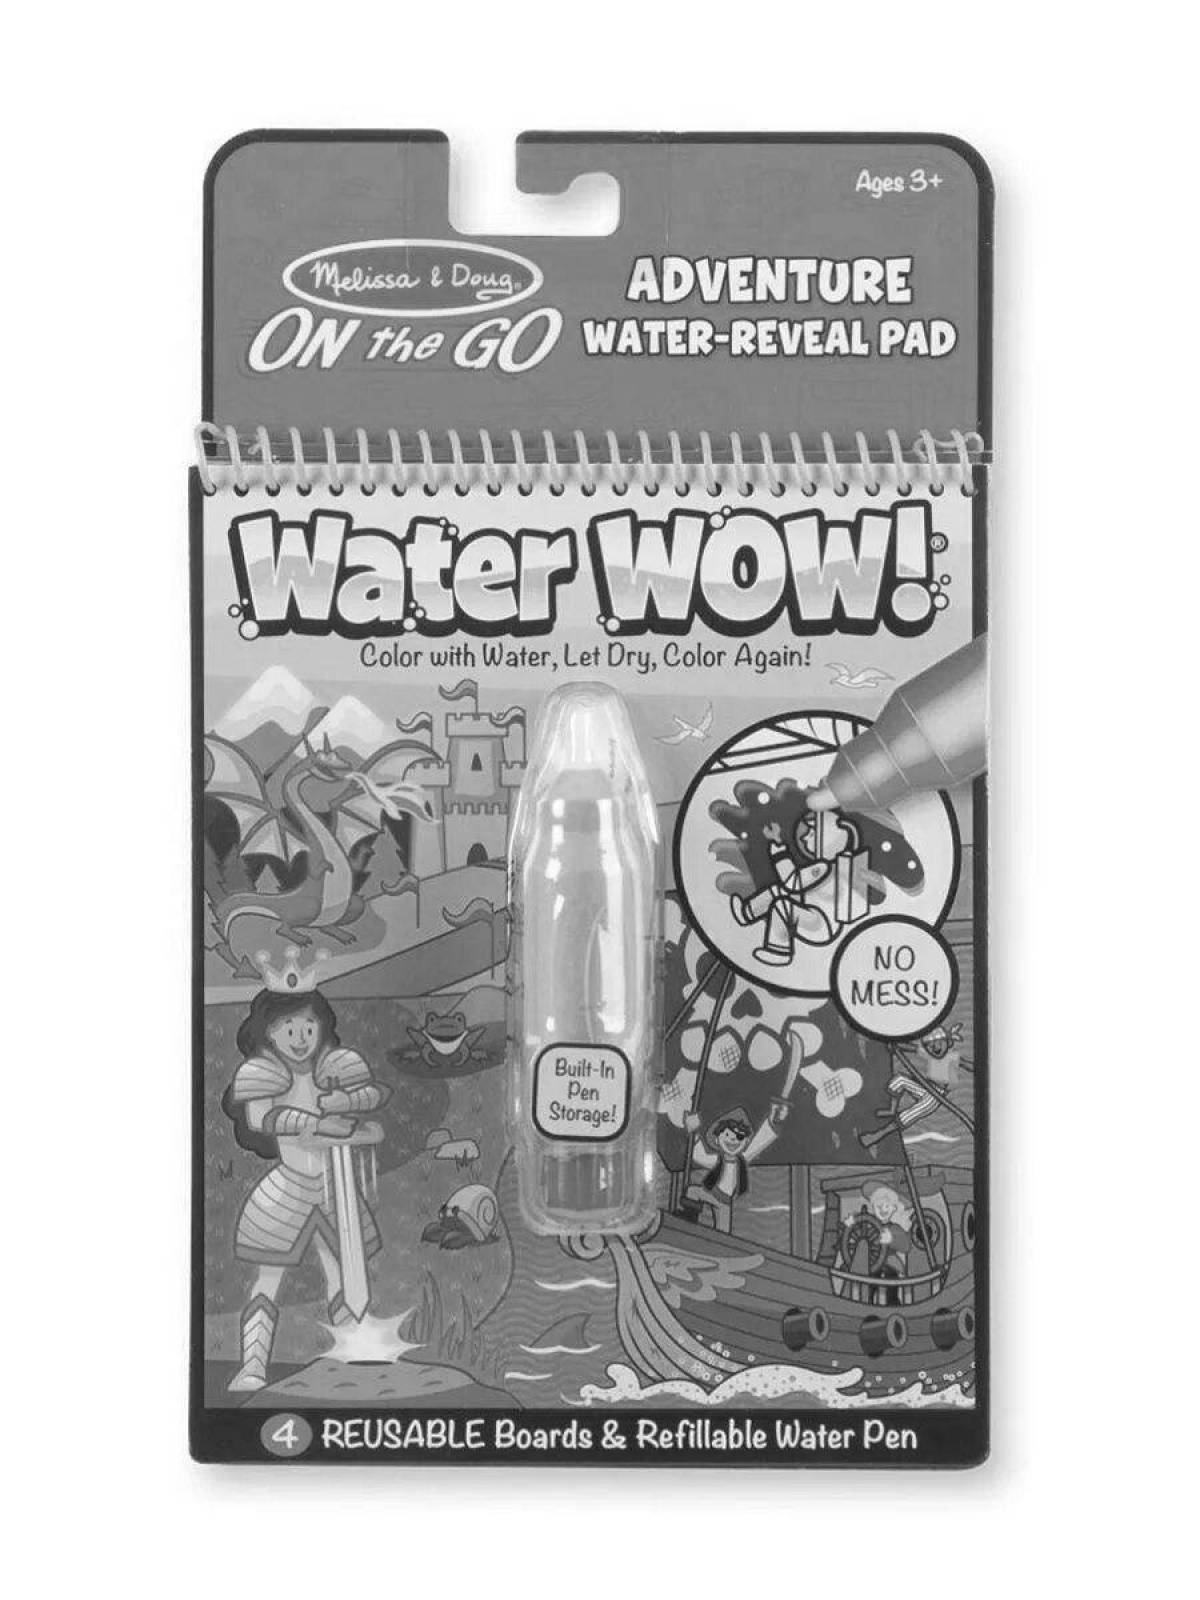 Joyful water wow coloring page